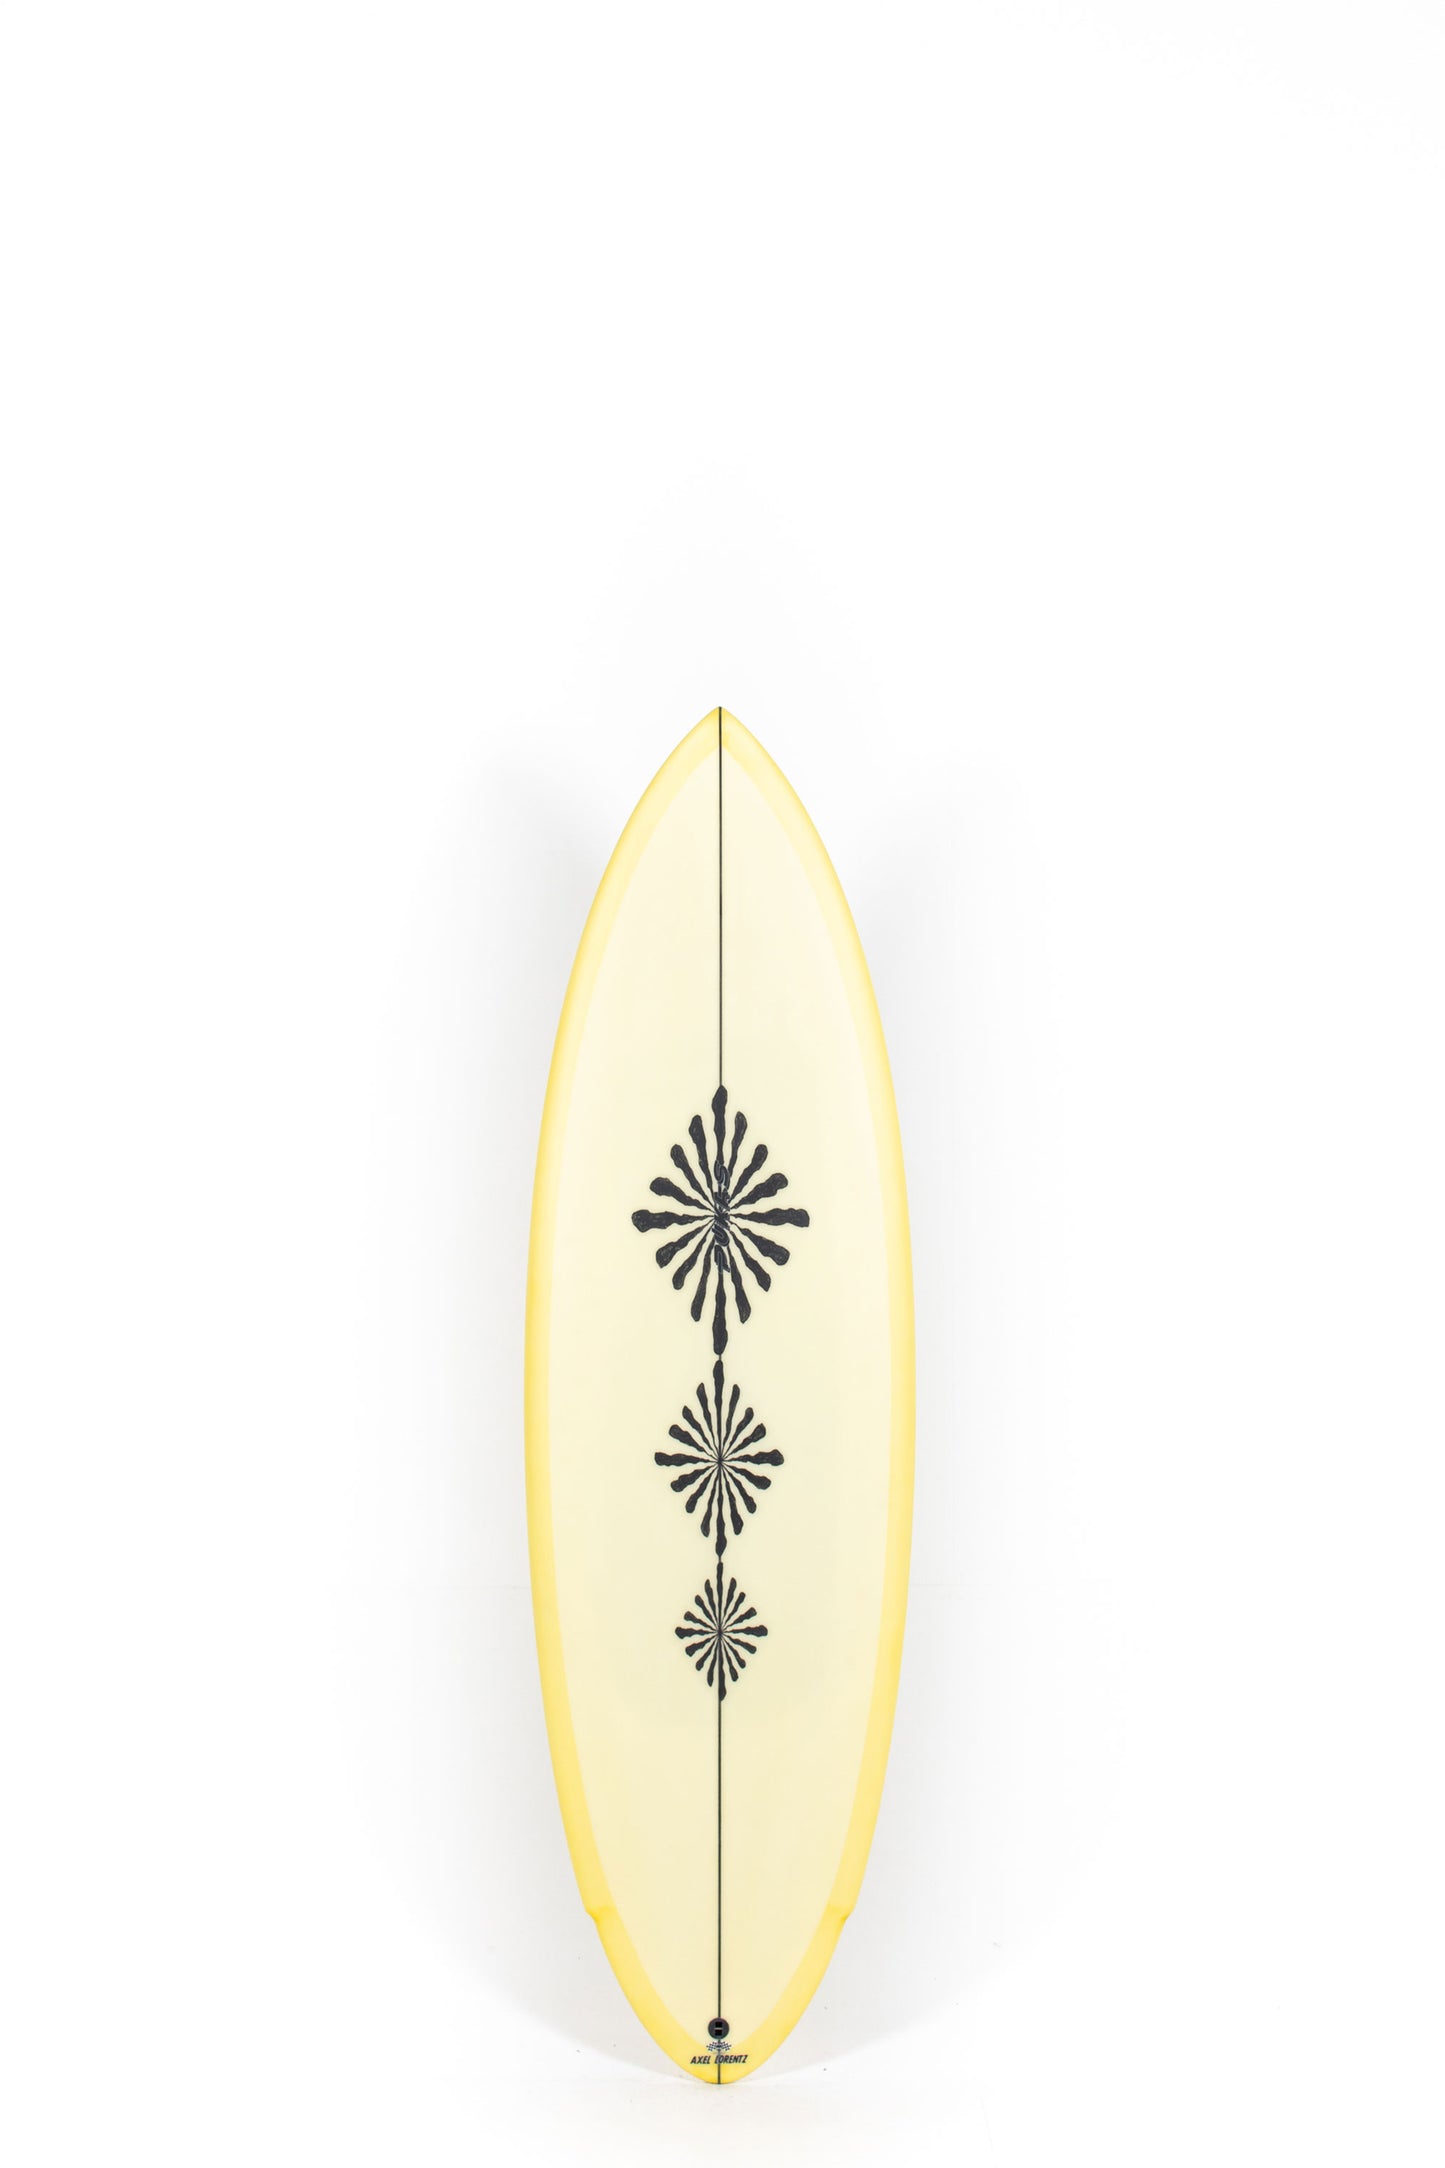 Pukas Surf Shop - Pukas Surfboards - ACID PLAN by Axel Lorentz - 5'10" x 20,25 x 2,5 x 32,38L - AX09197